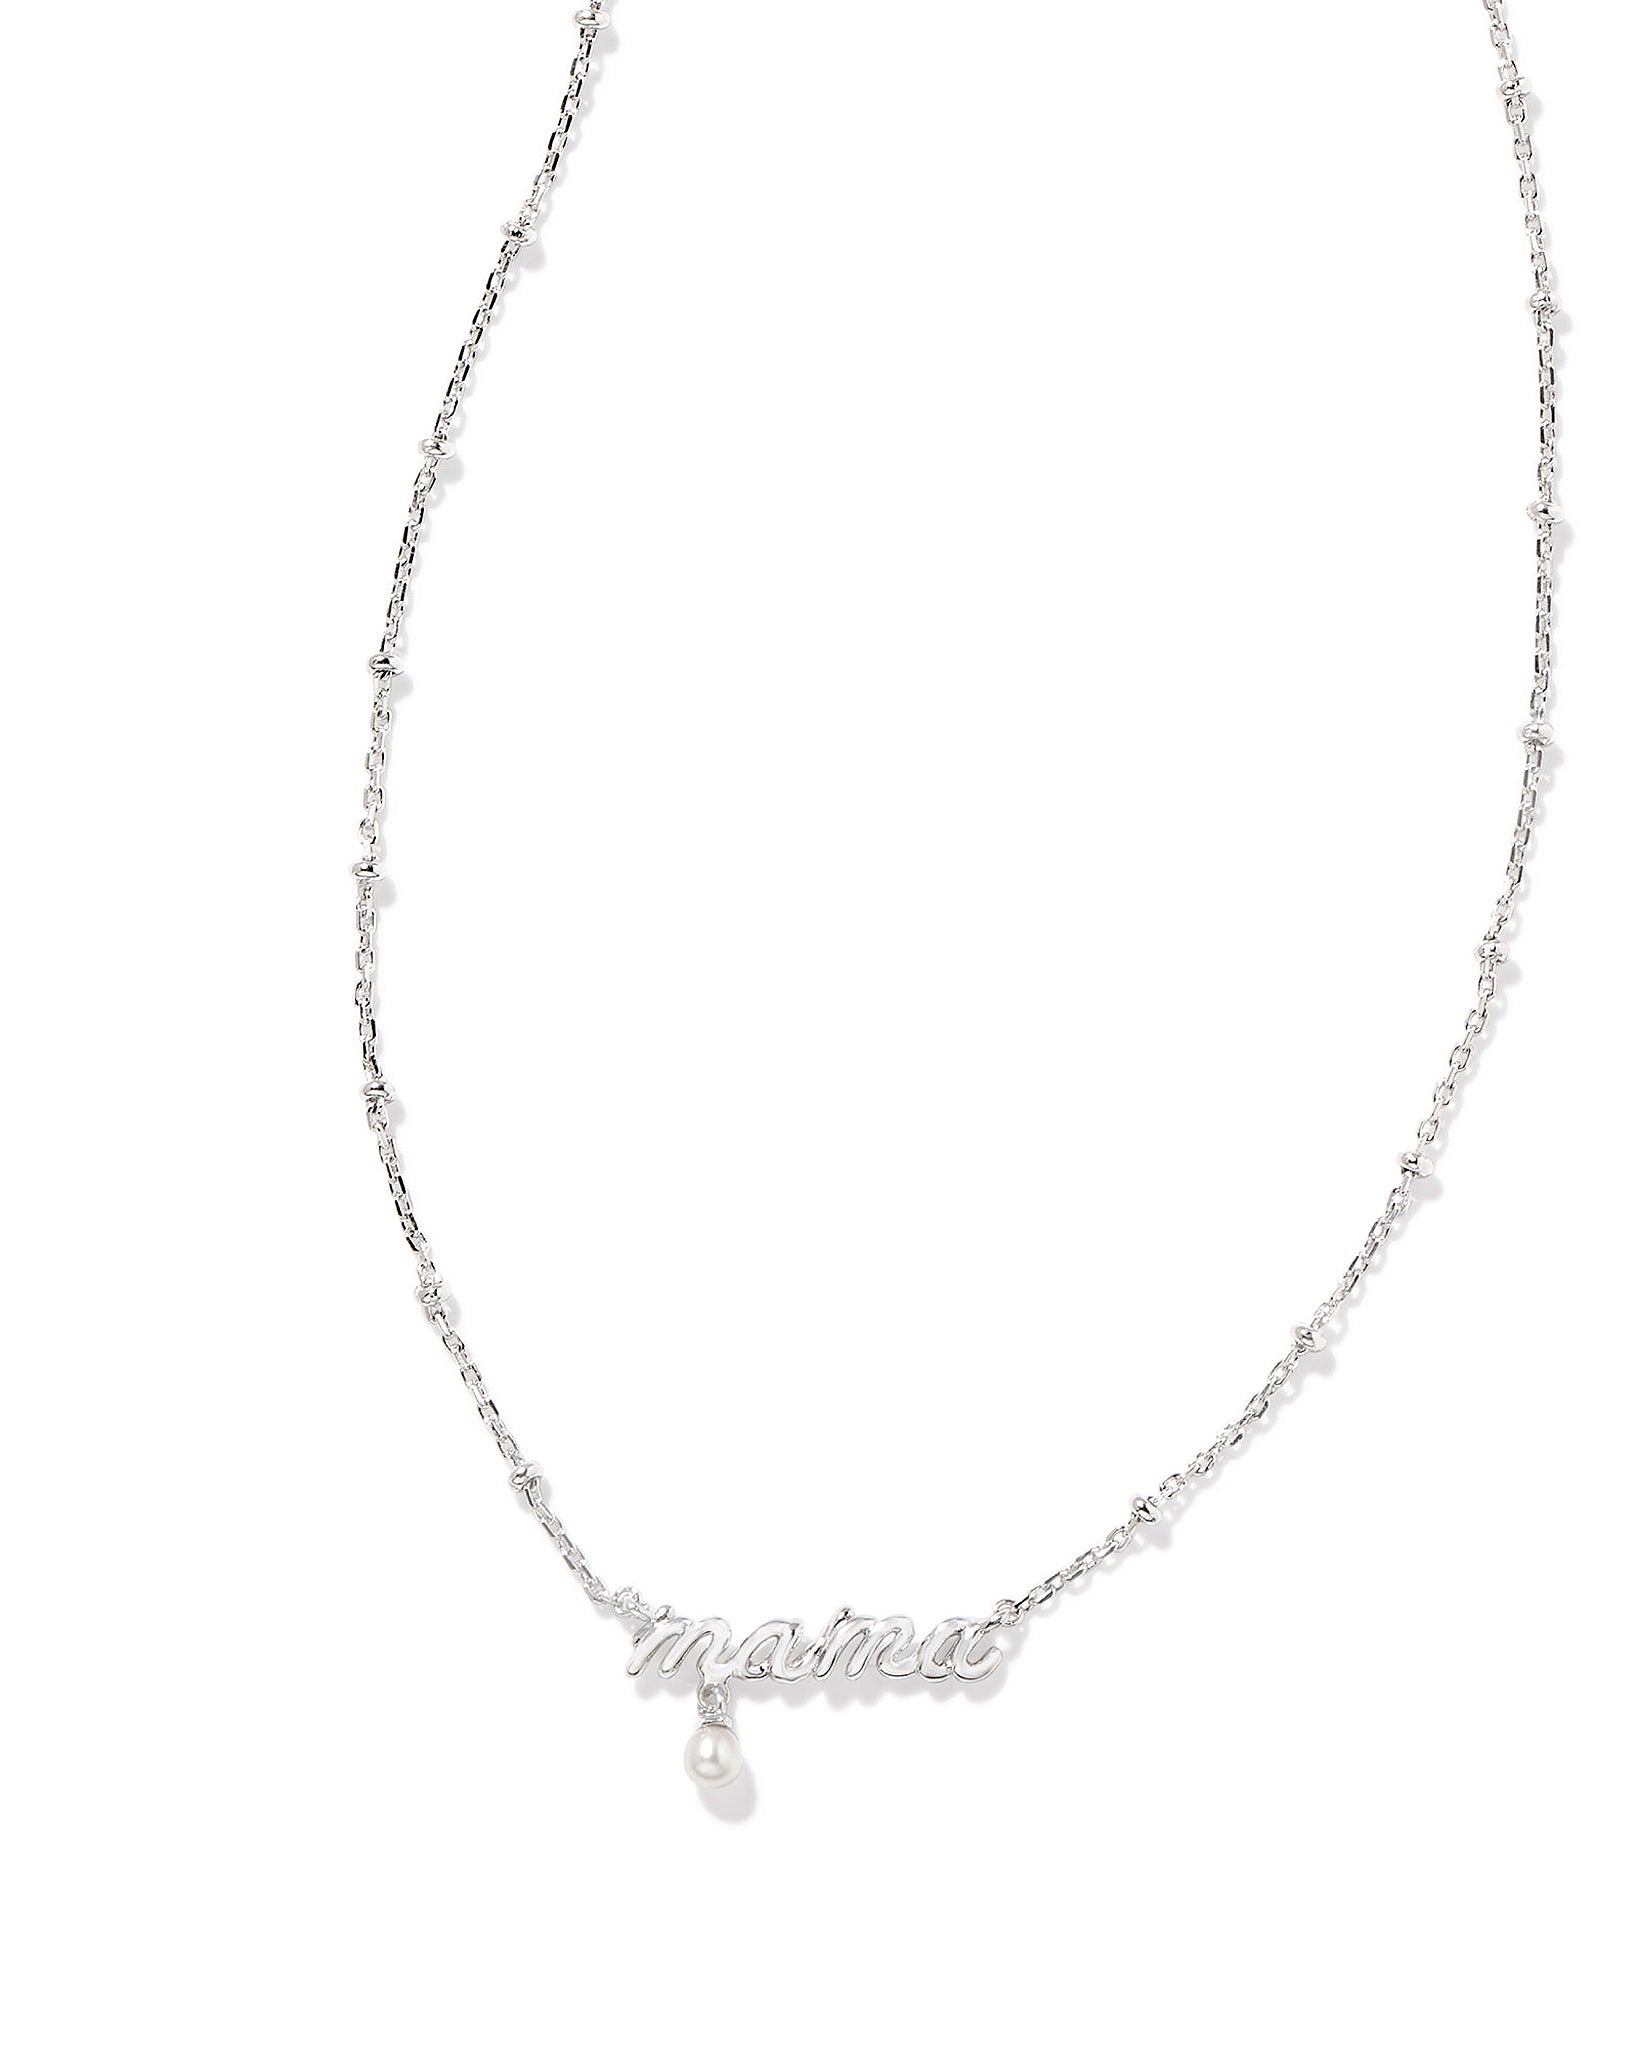 Kendra Scott MAMA Script Satellite Chain Pendant Necklace in White Pearl and Rhodium Plated